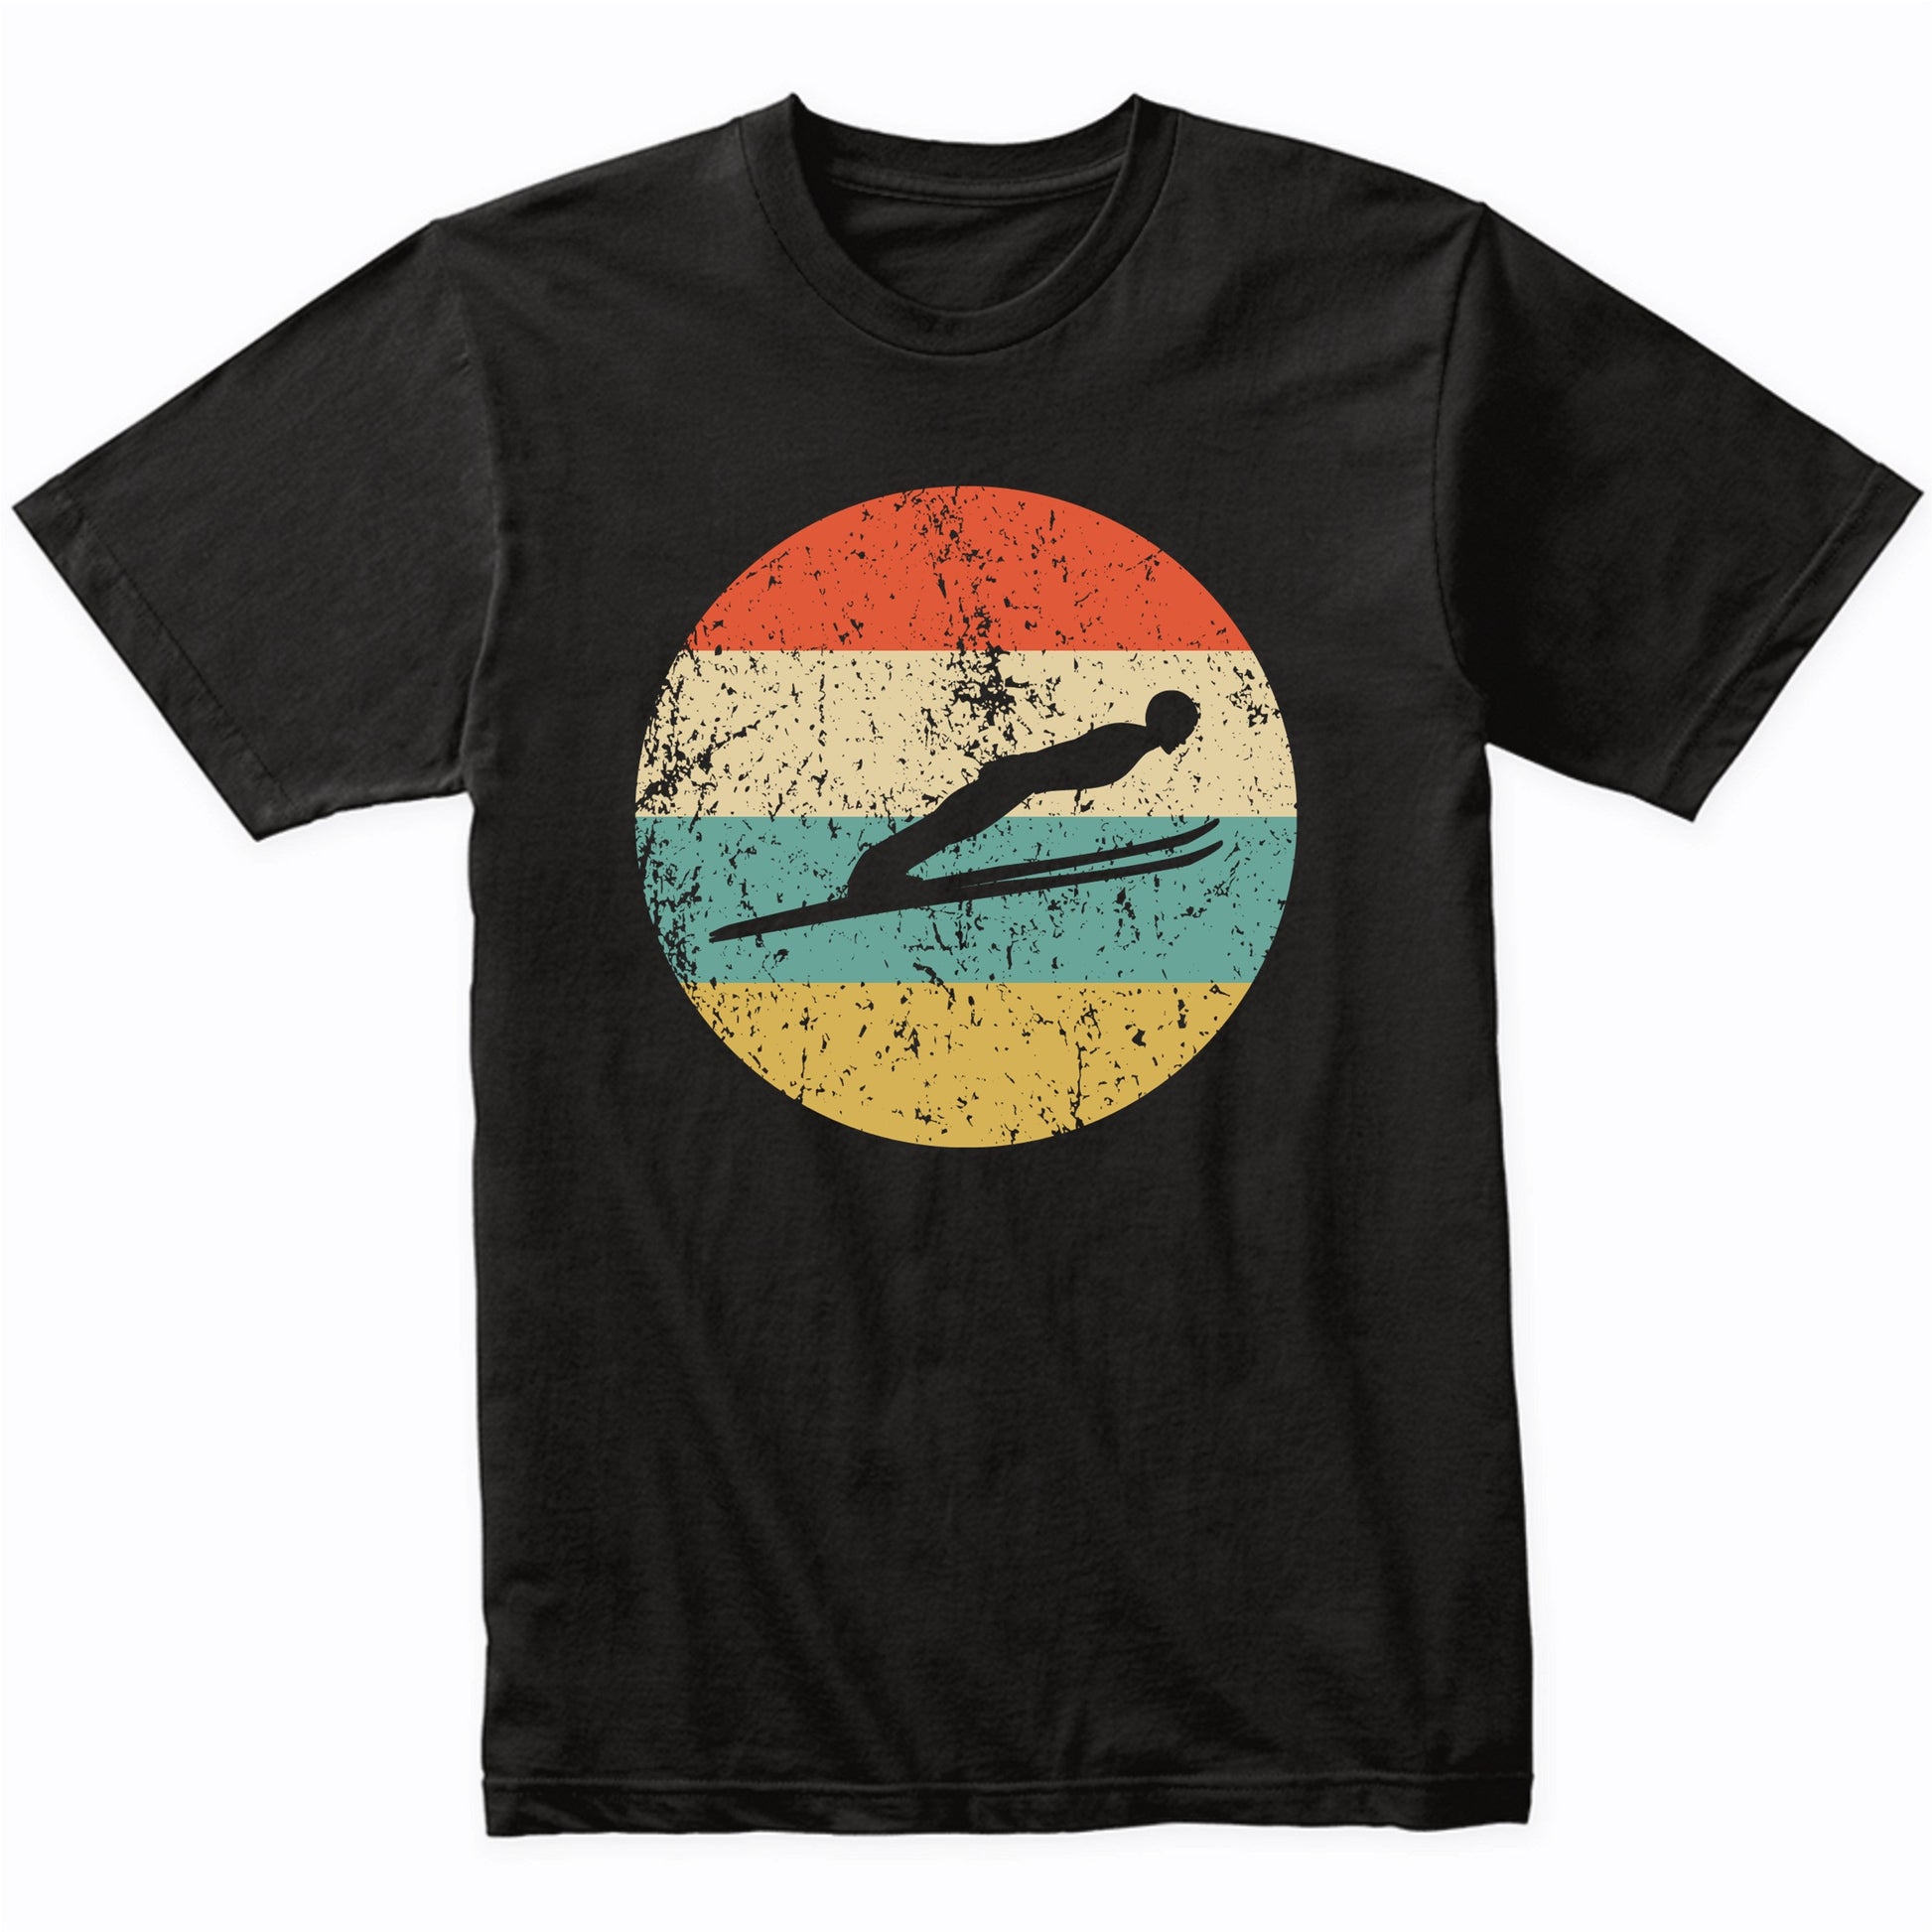 Ski Jumping Shirt - Vintage Retro Ski Jumper T-Shirt